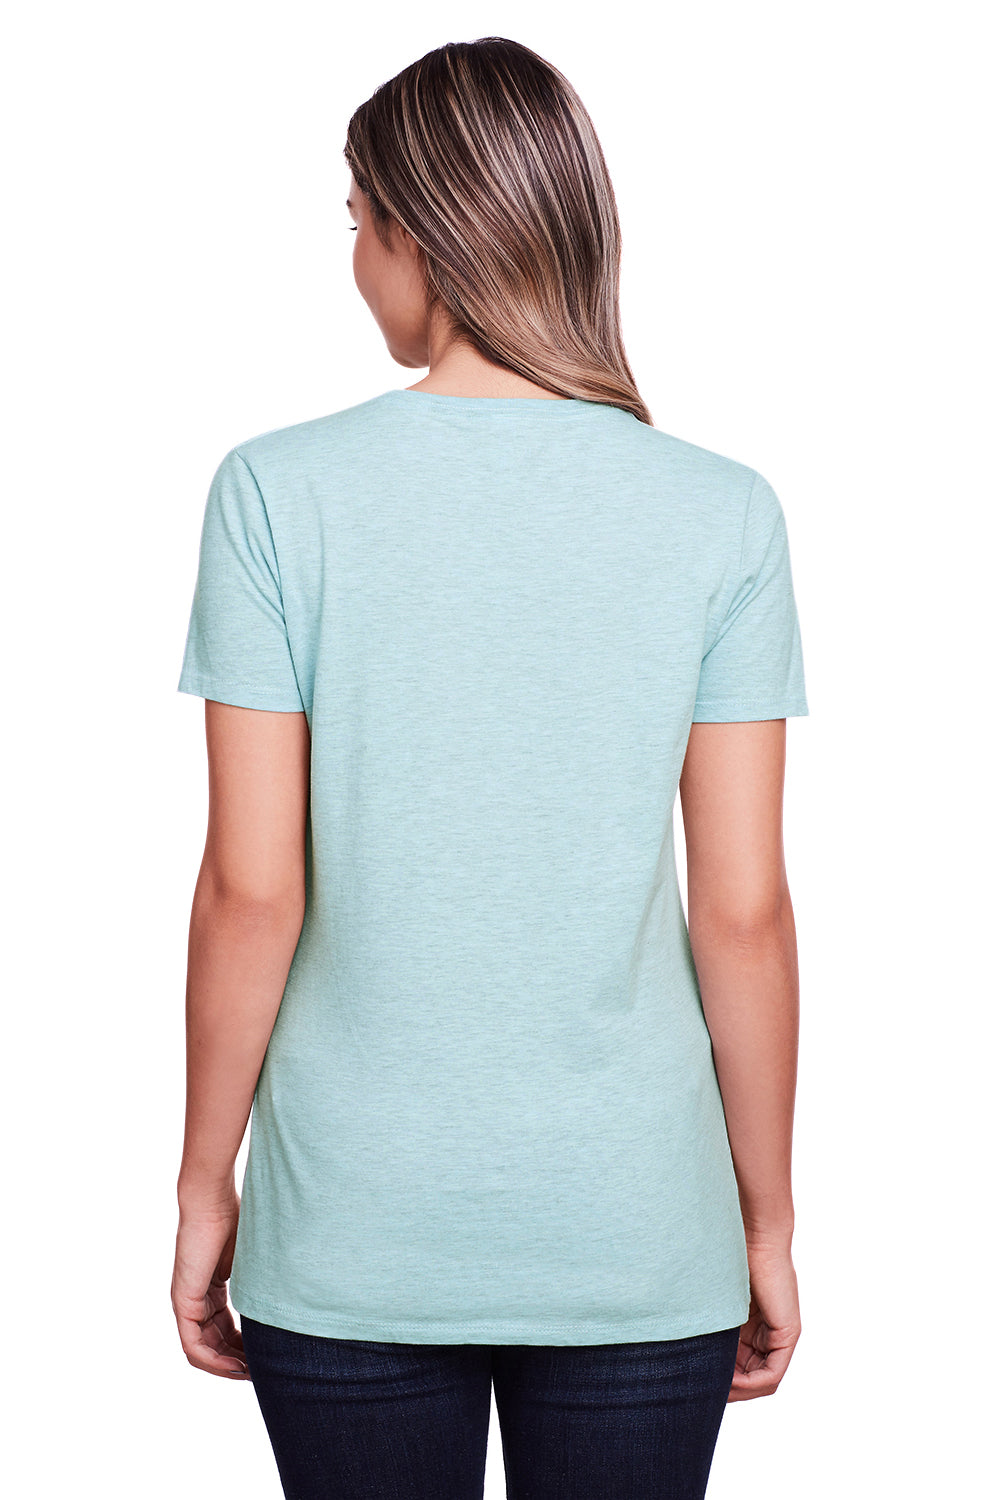 Fruit Of The Loom IC47WR Womens Iconic Short Sleeve Crewneck T-Shirt Heather Aqua Blue Back